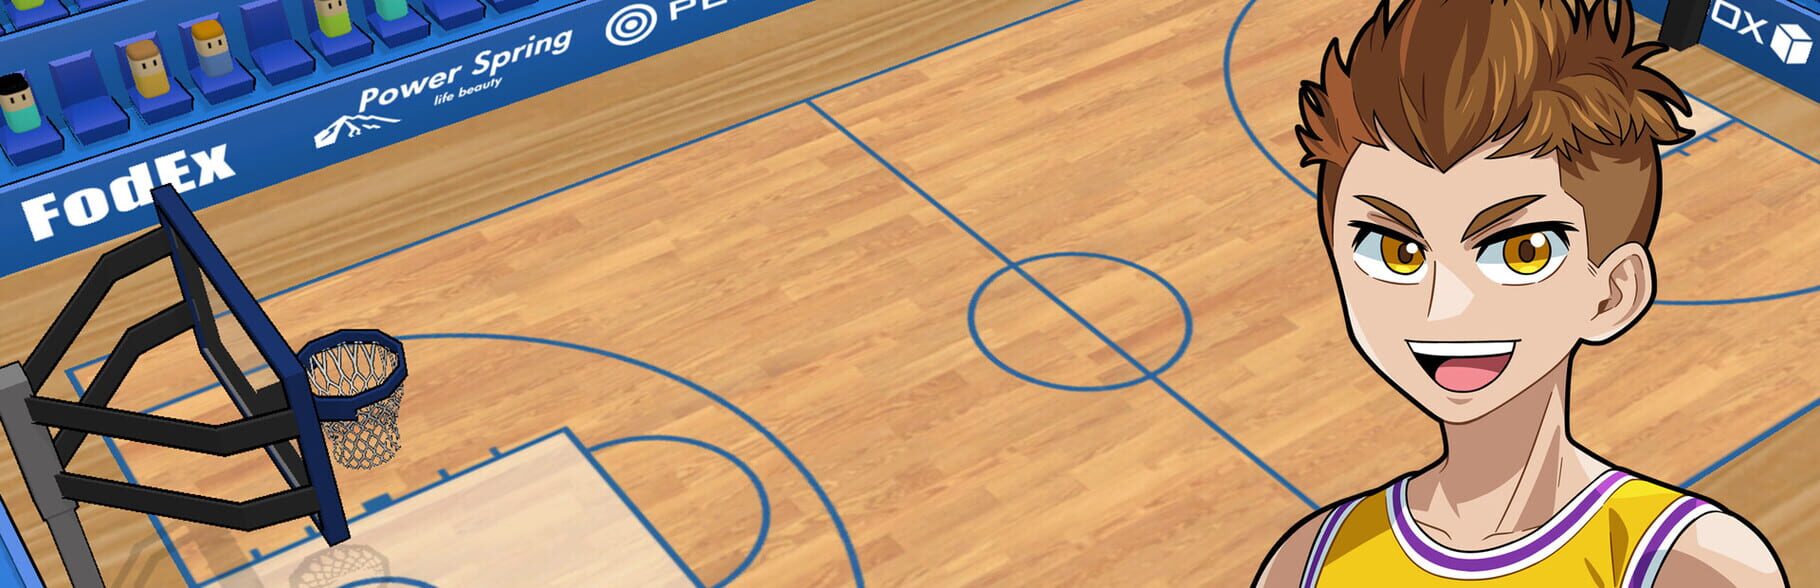 Desktop Basketball 2 artwork